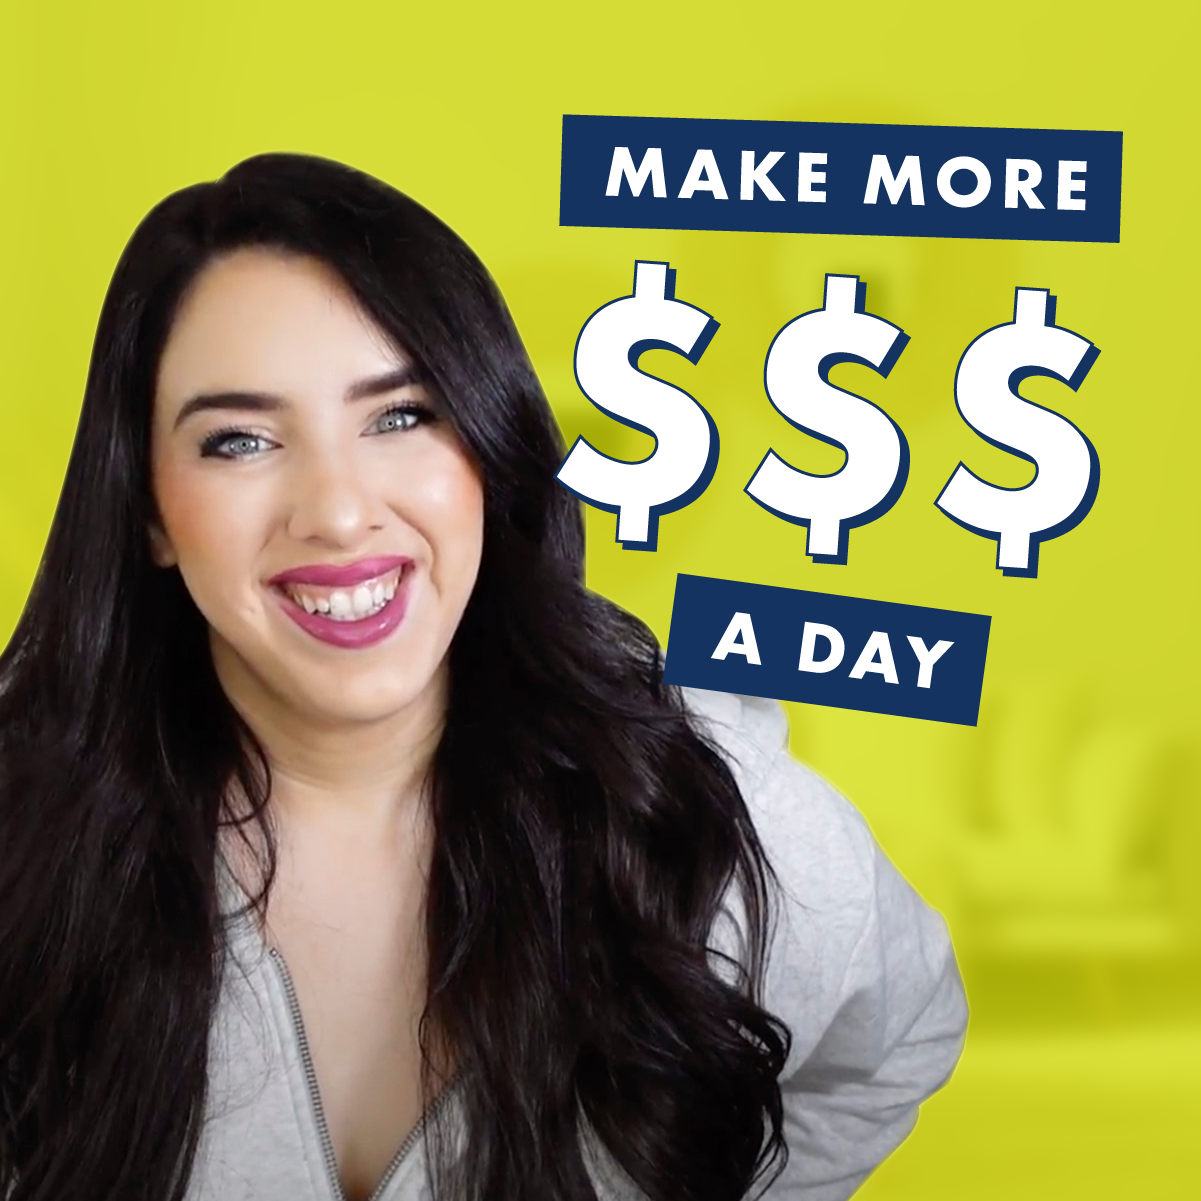 Make More $$$ A Day